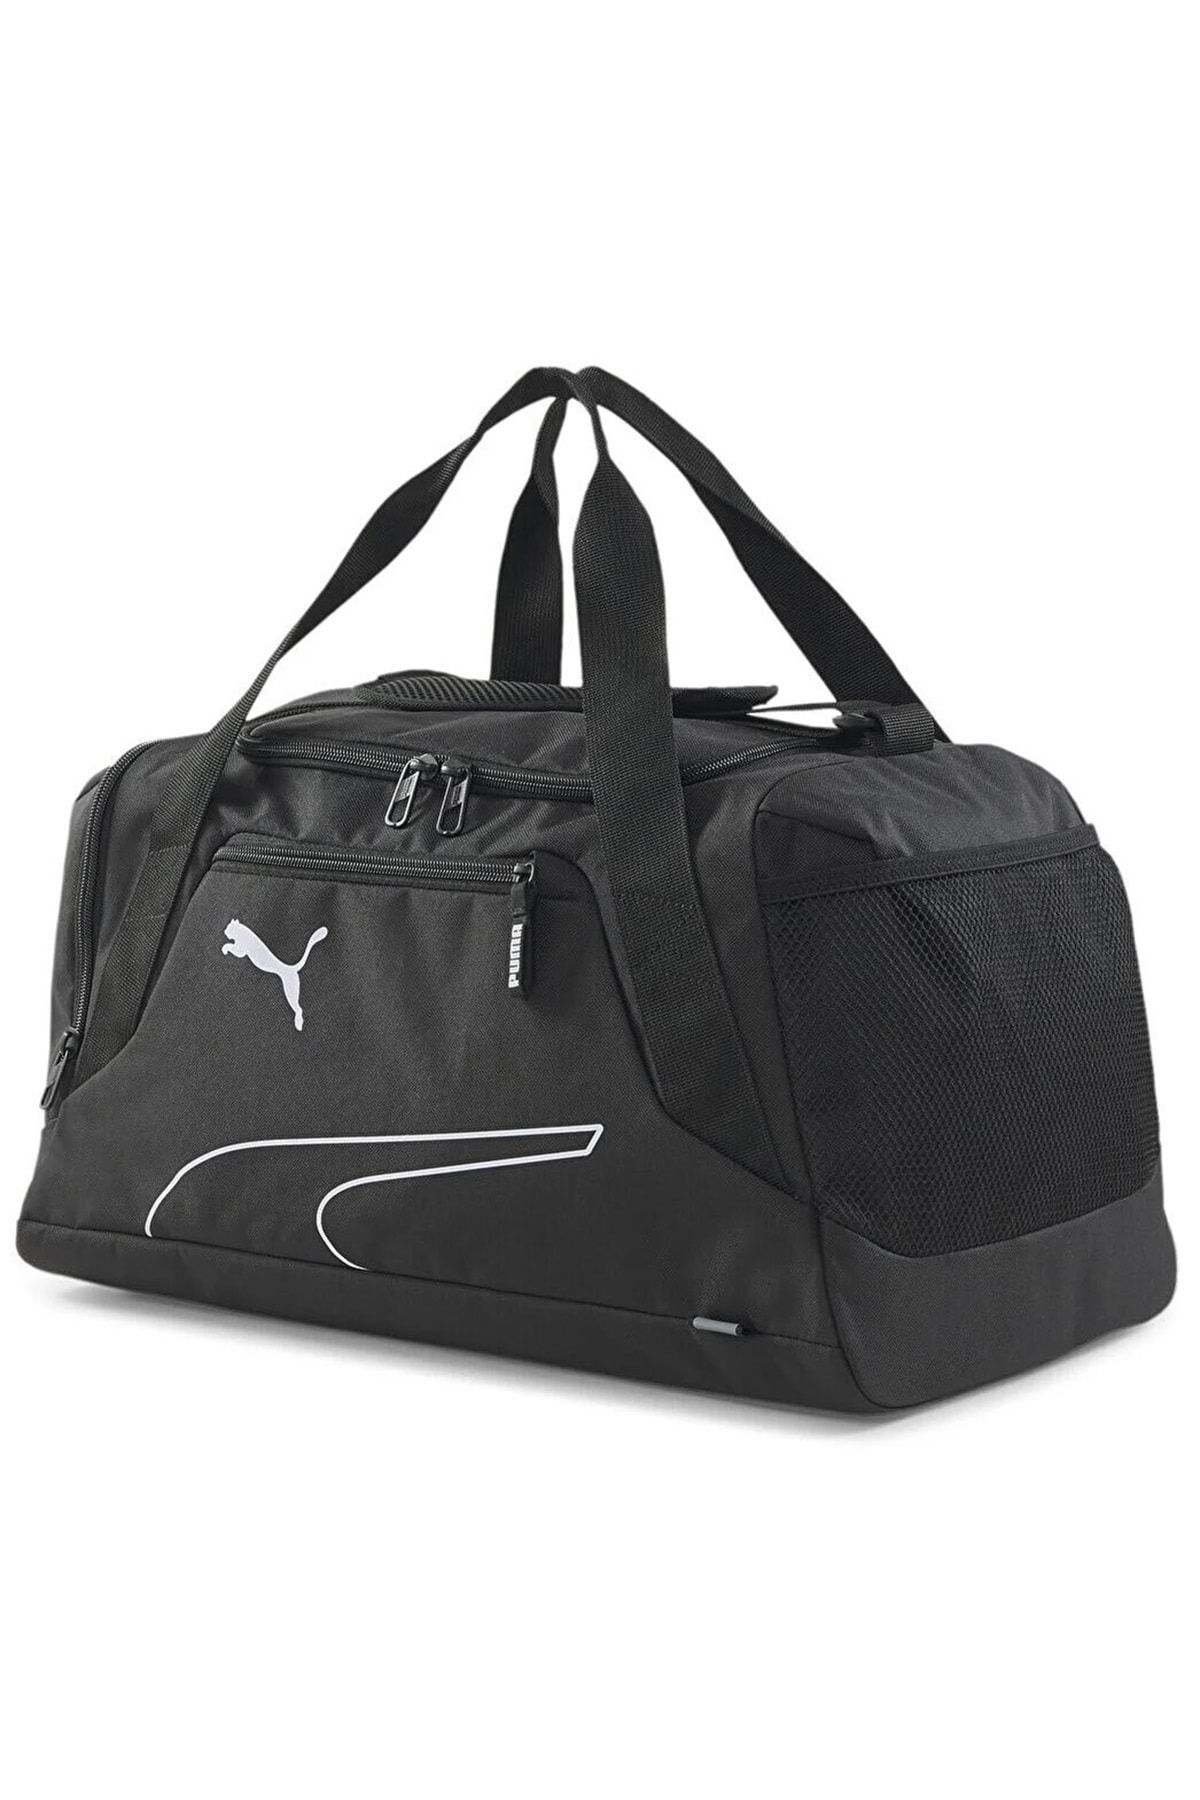 Puma Fundamentals Sports Small Bag Unisex Sports Travel Bag Black NWT  079230-01